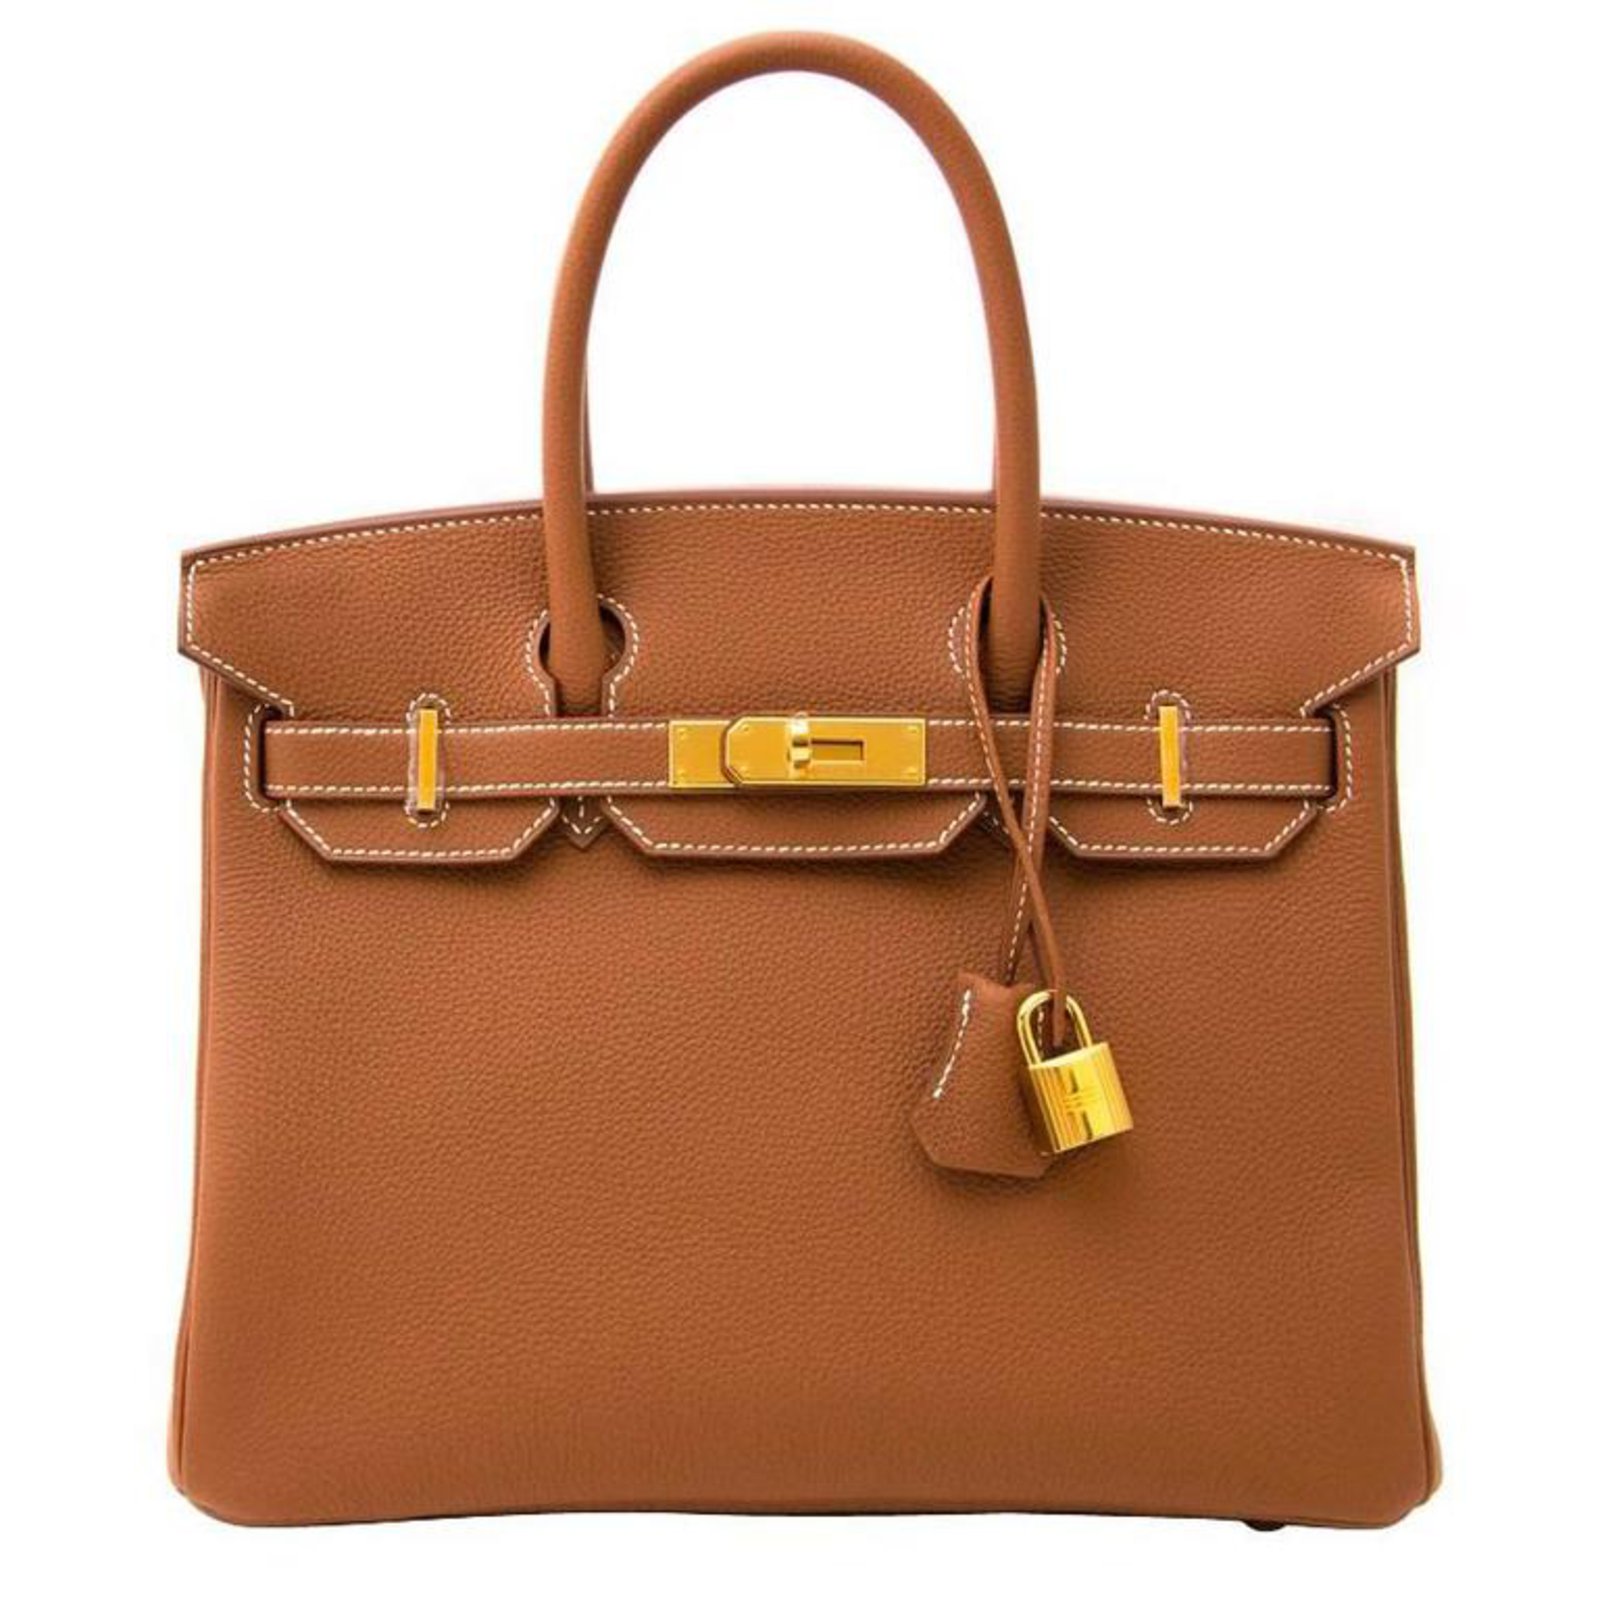 Handbag Hermes Original Price | IQS Executive